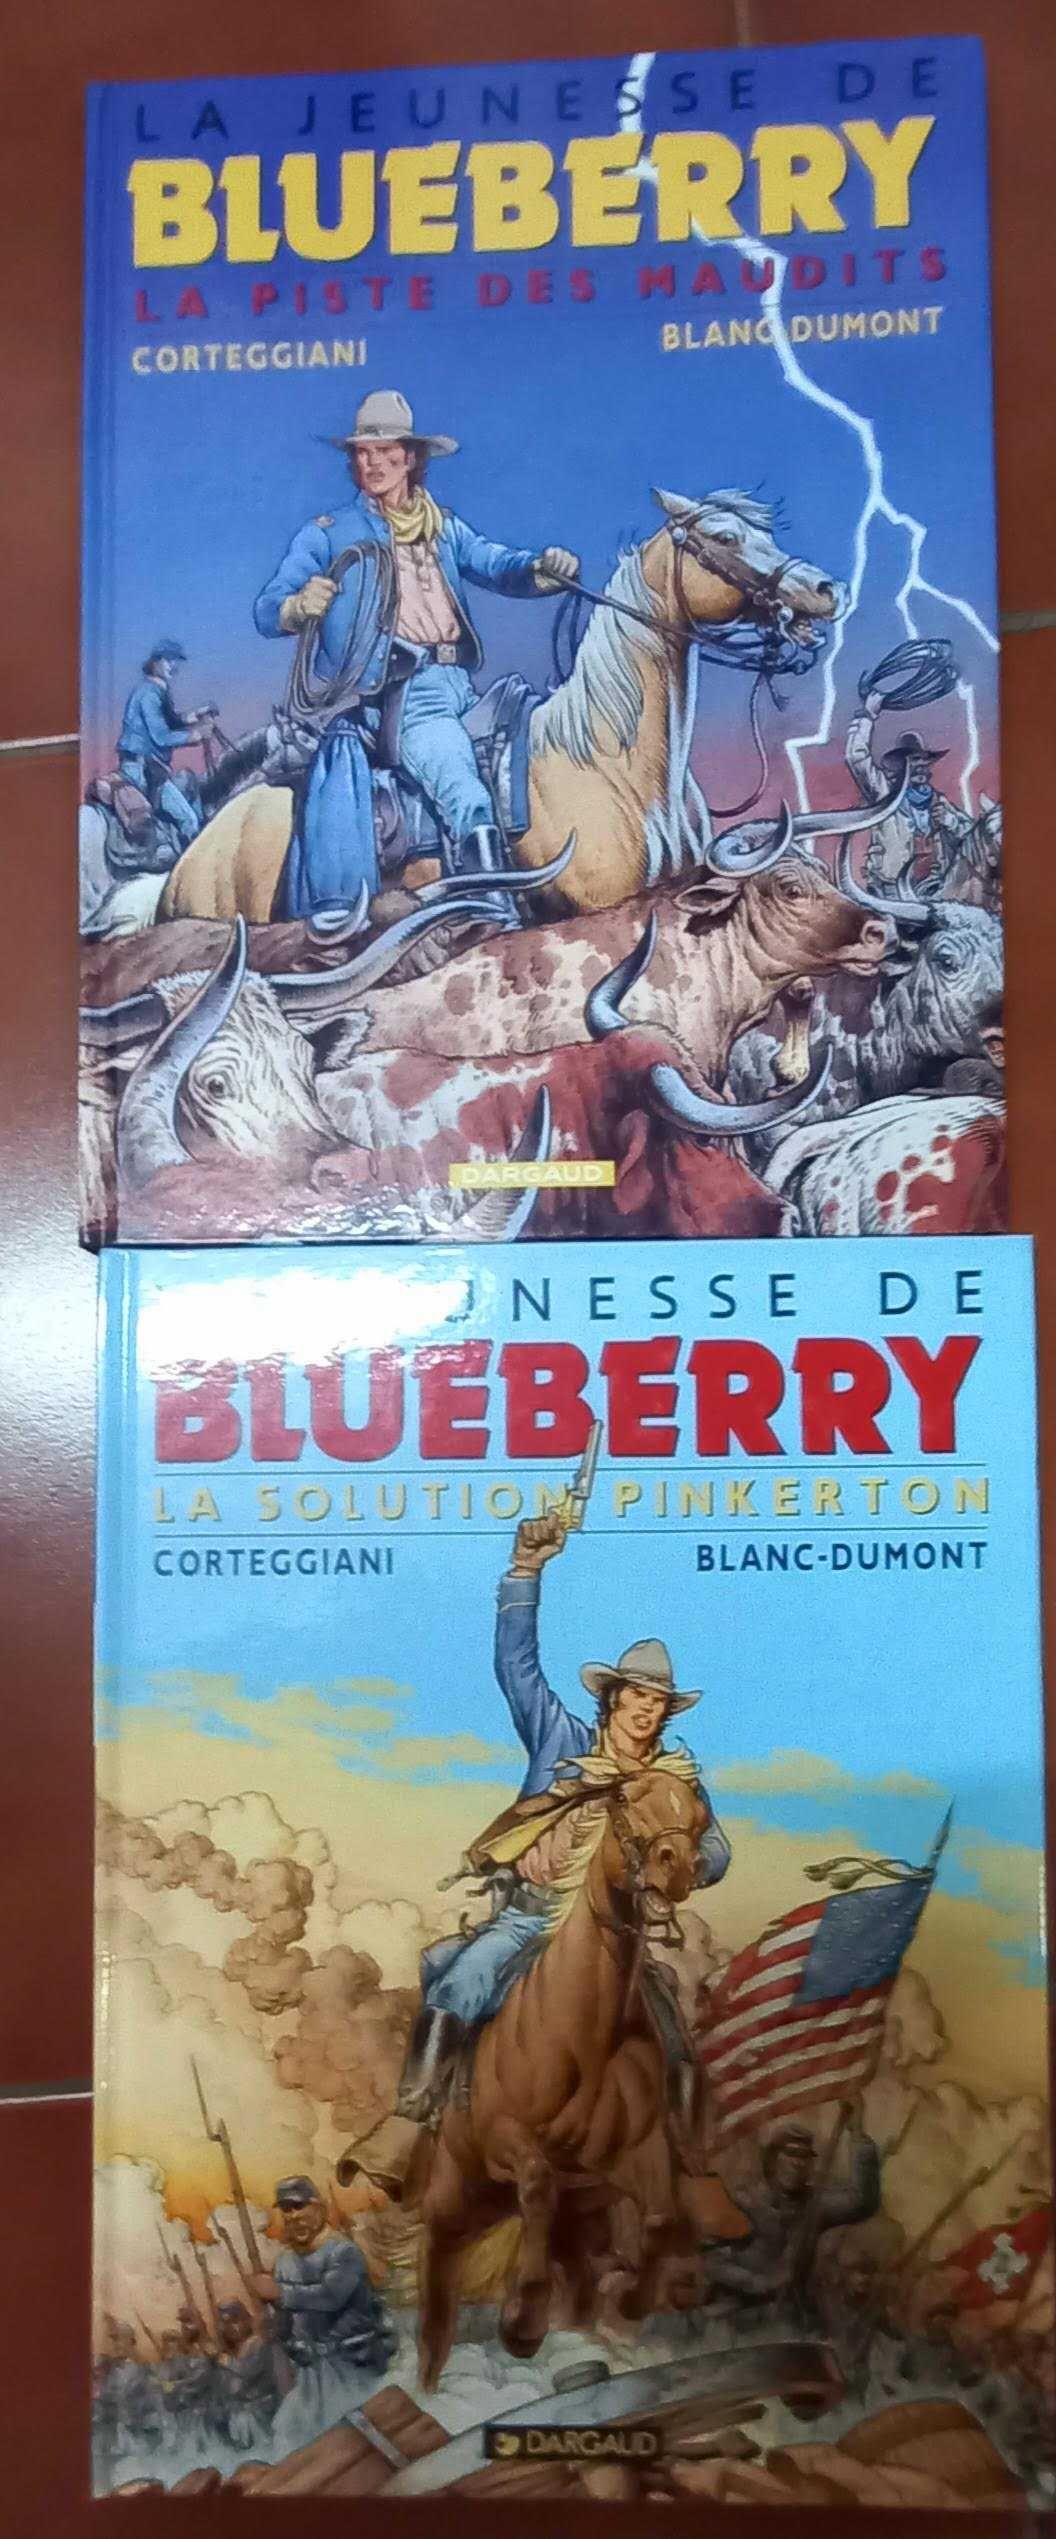 La Jeunesse de Blueberry”